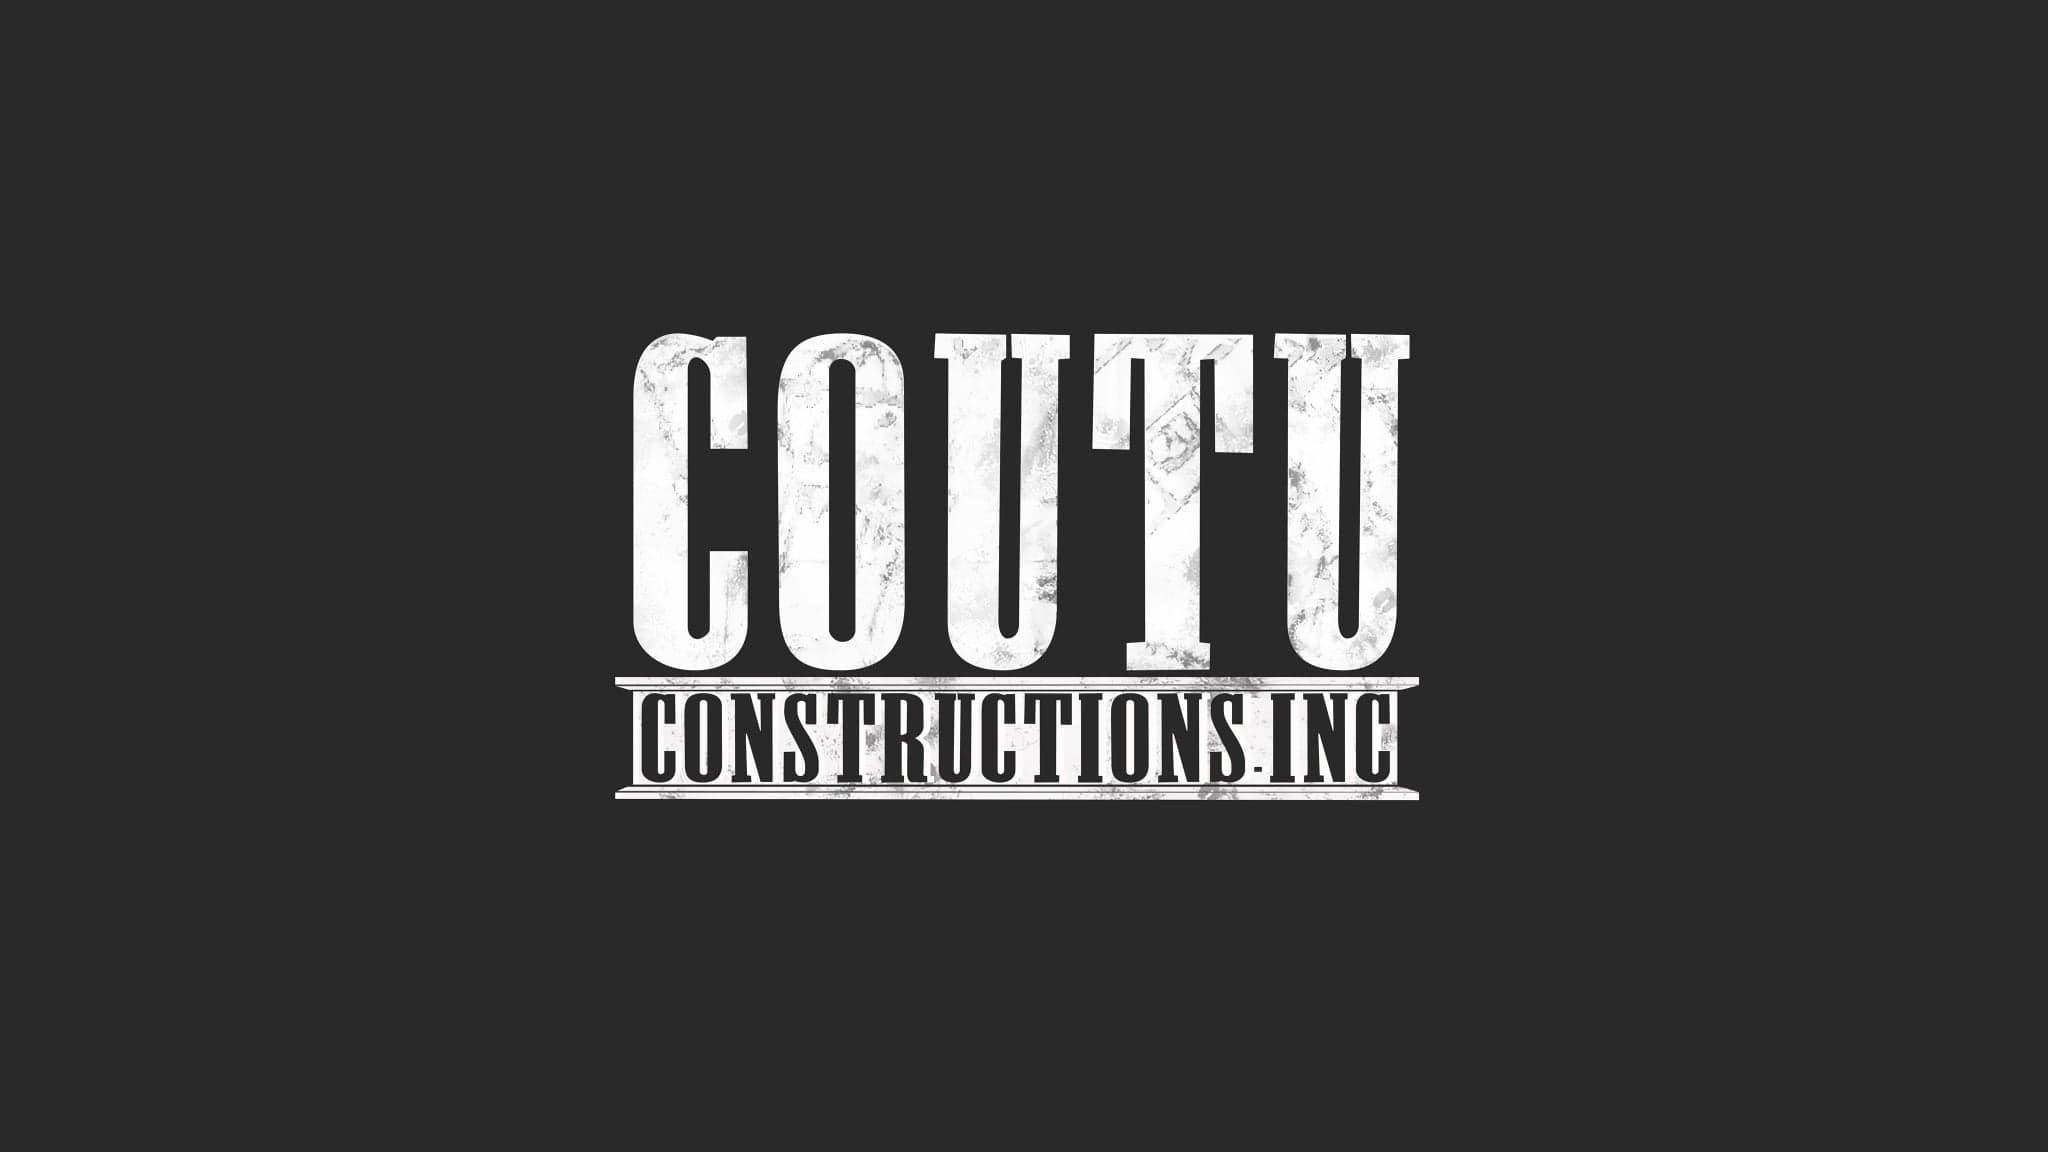 COUTU CONSTRUCTIONS INC.